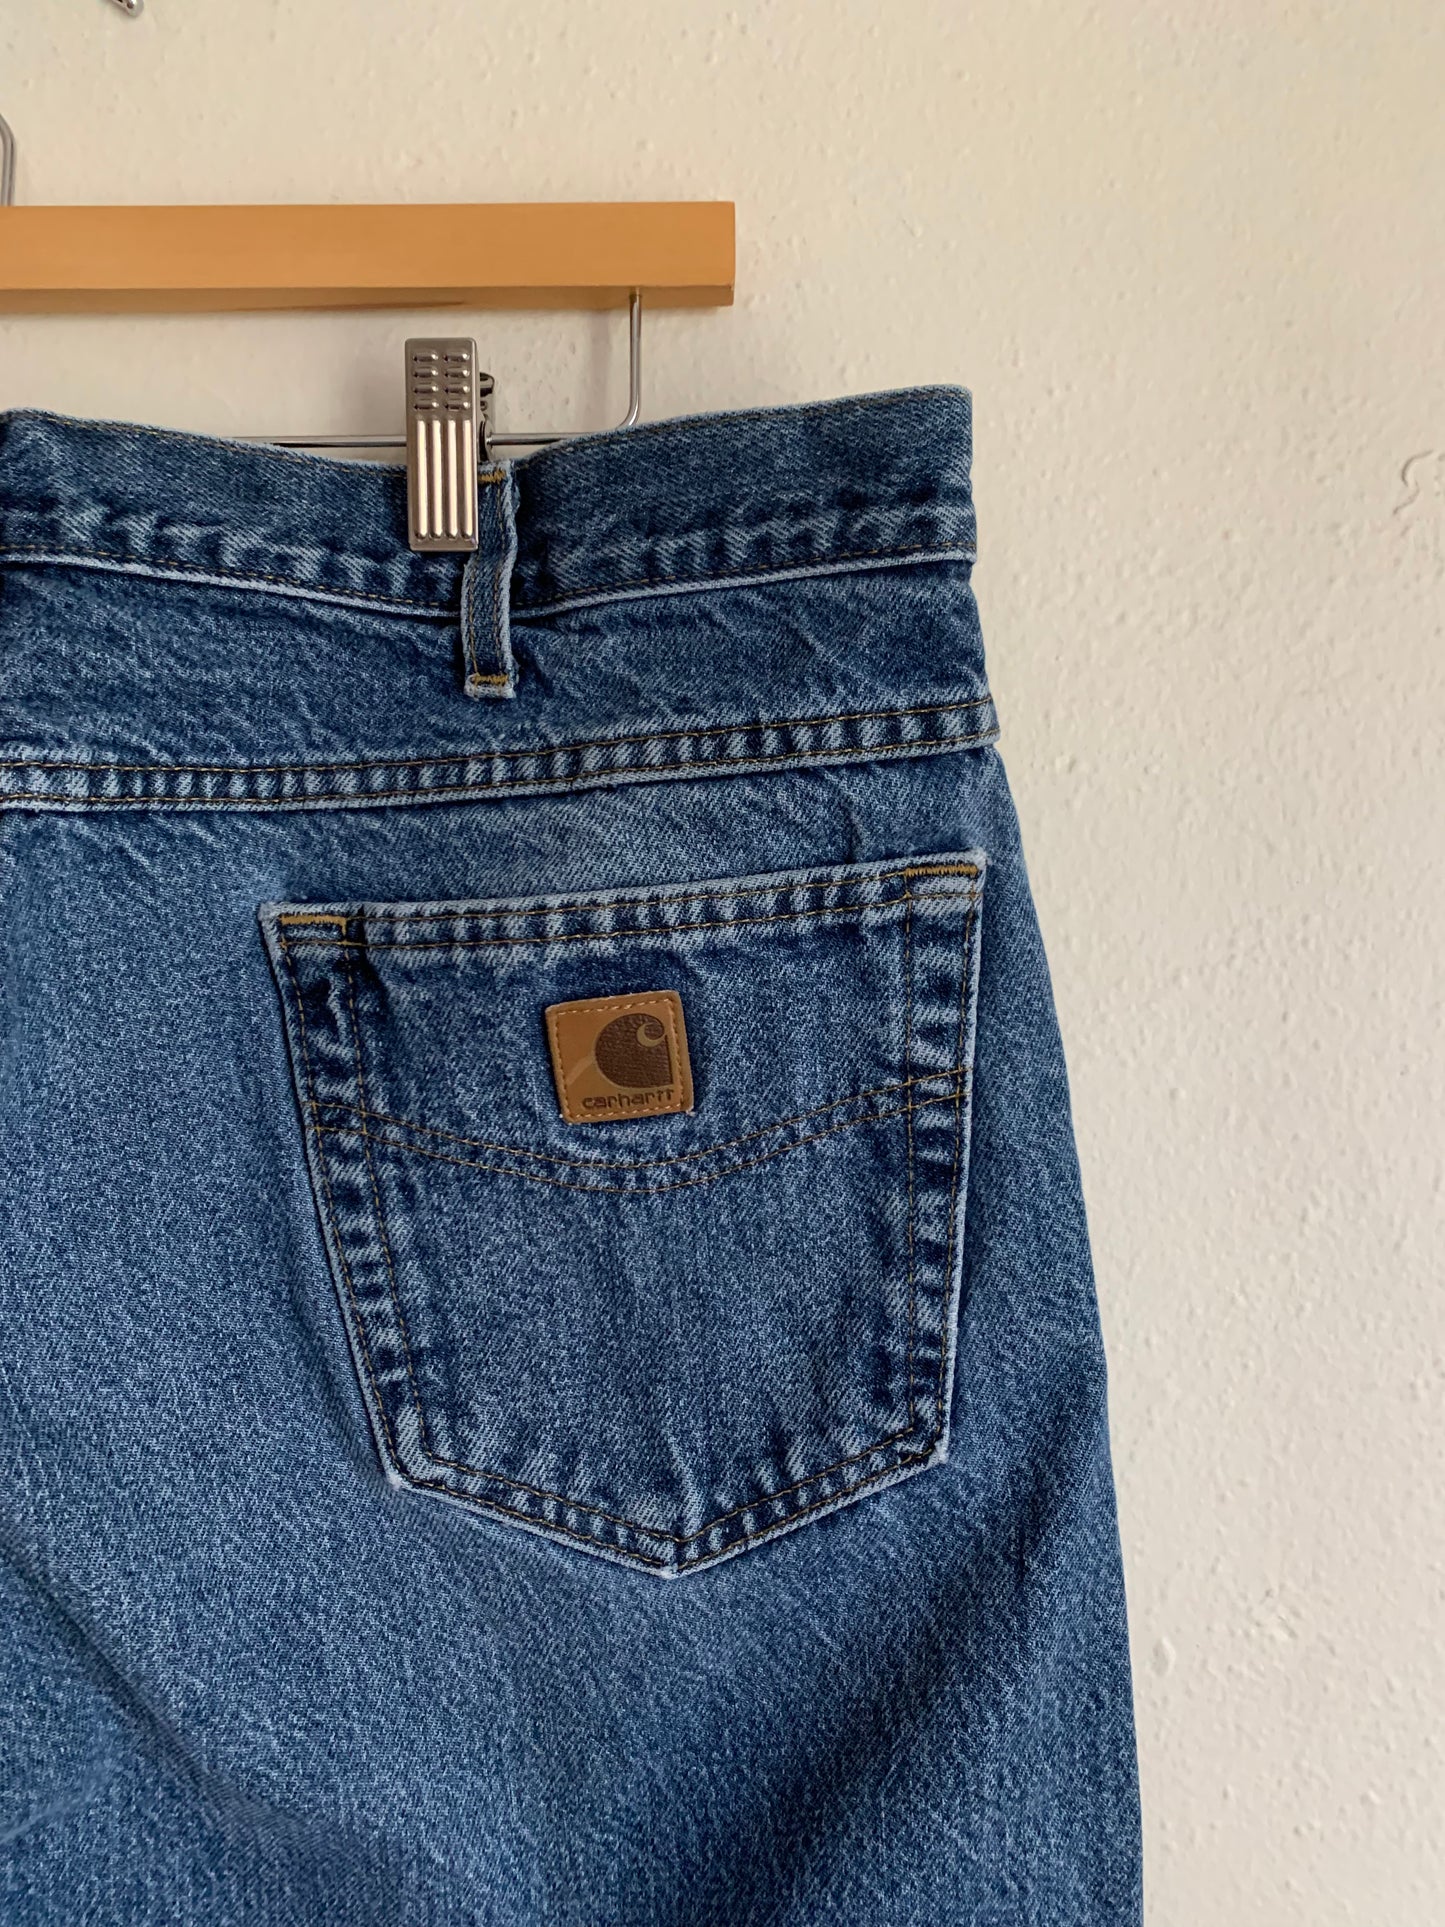 Carhartt Jeans (38x32)